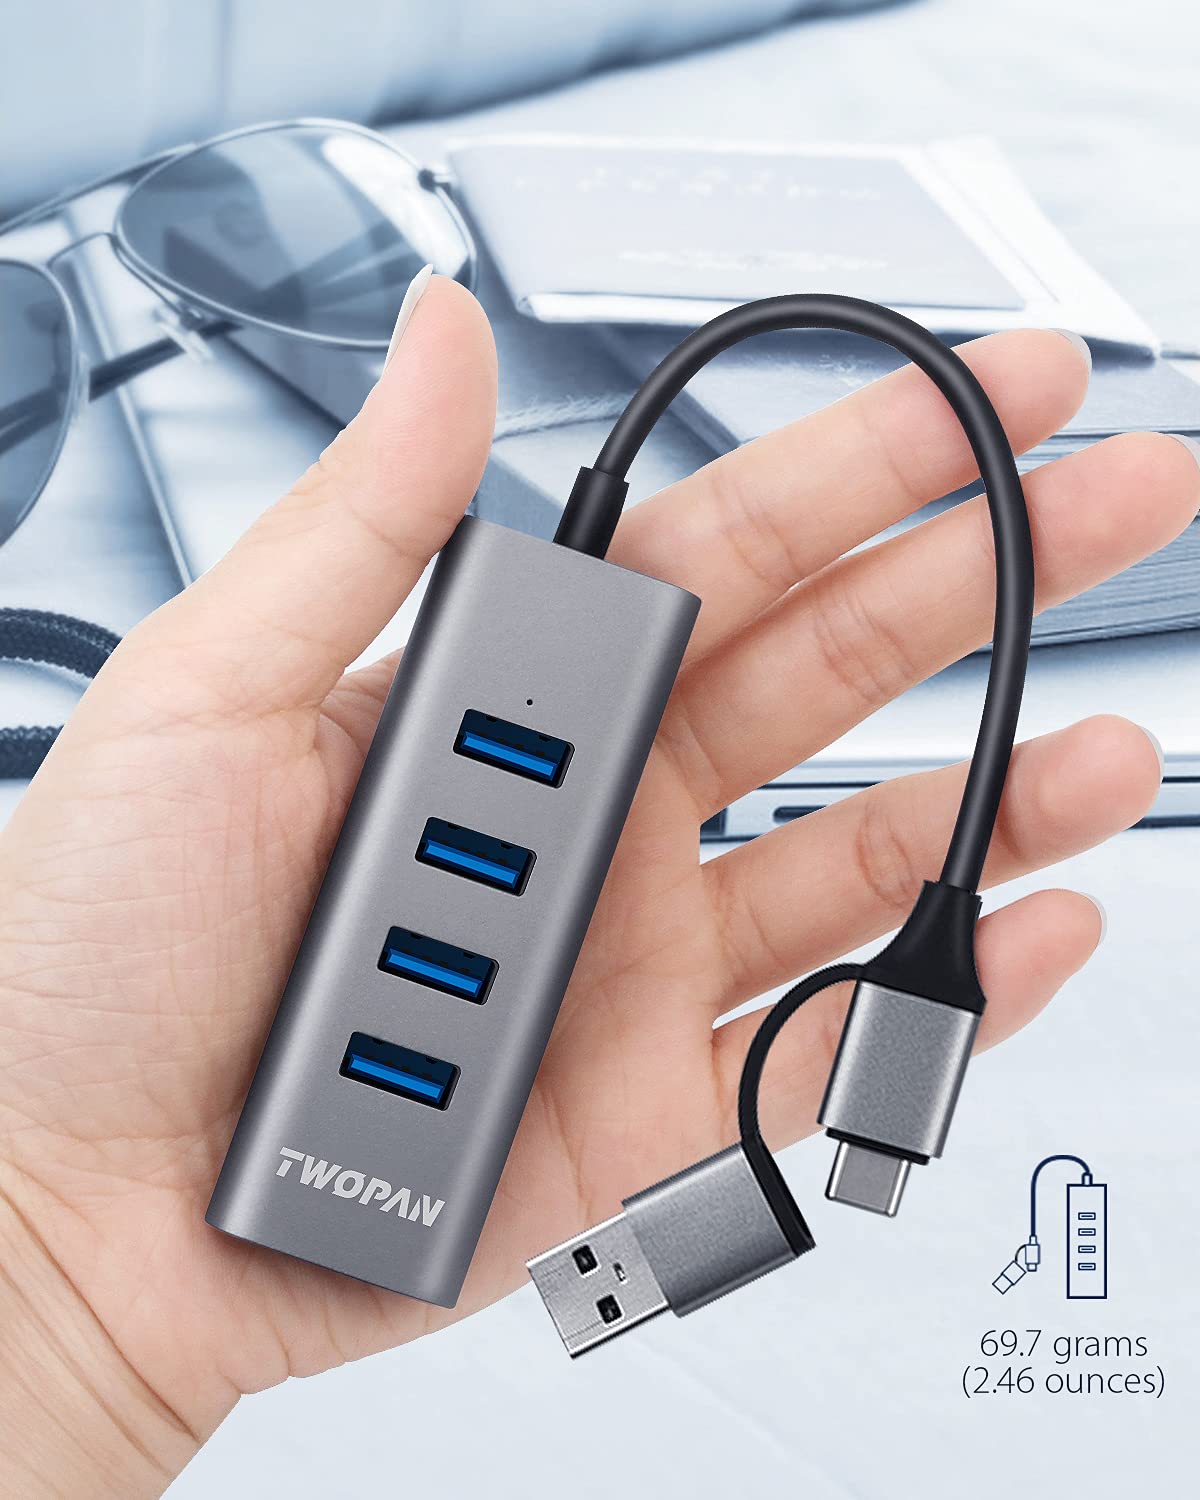 TWOPAN USB C to USB Port Hub, High-Speed 4-Port USB 3.0 Hub Adapter for MacBook Pro/Air, iMac, iPad, Pixelbook, Chromebook, Yoga, XPS